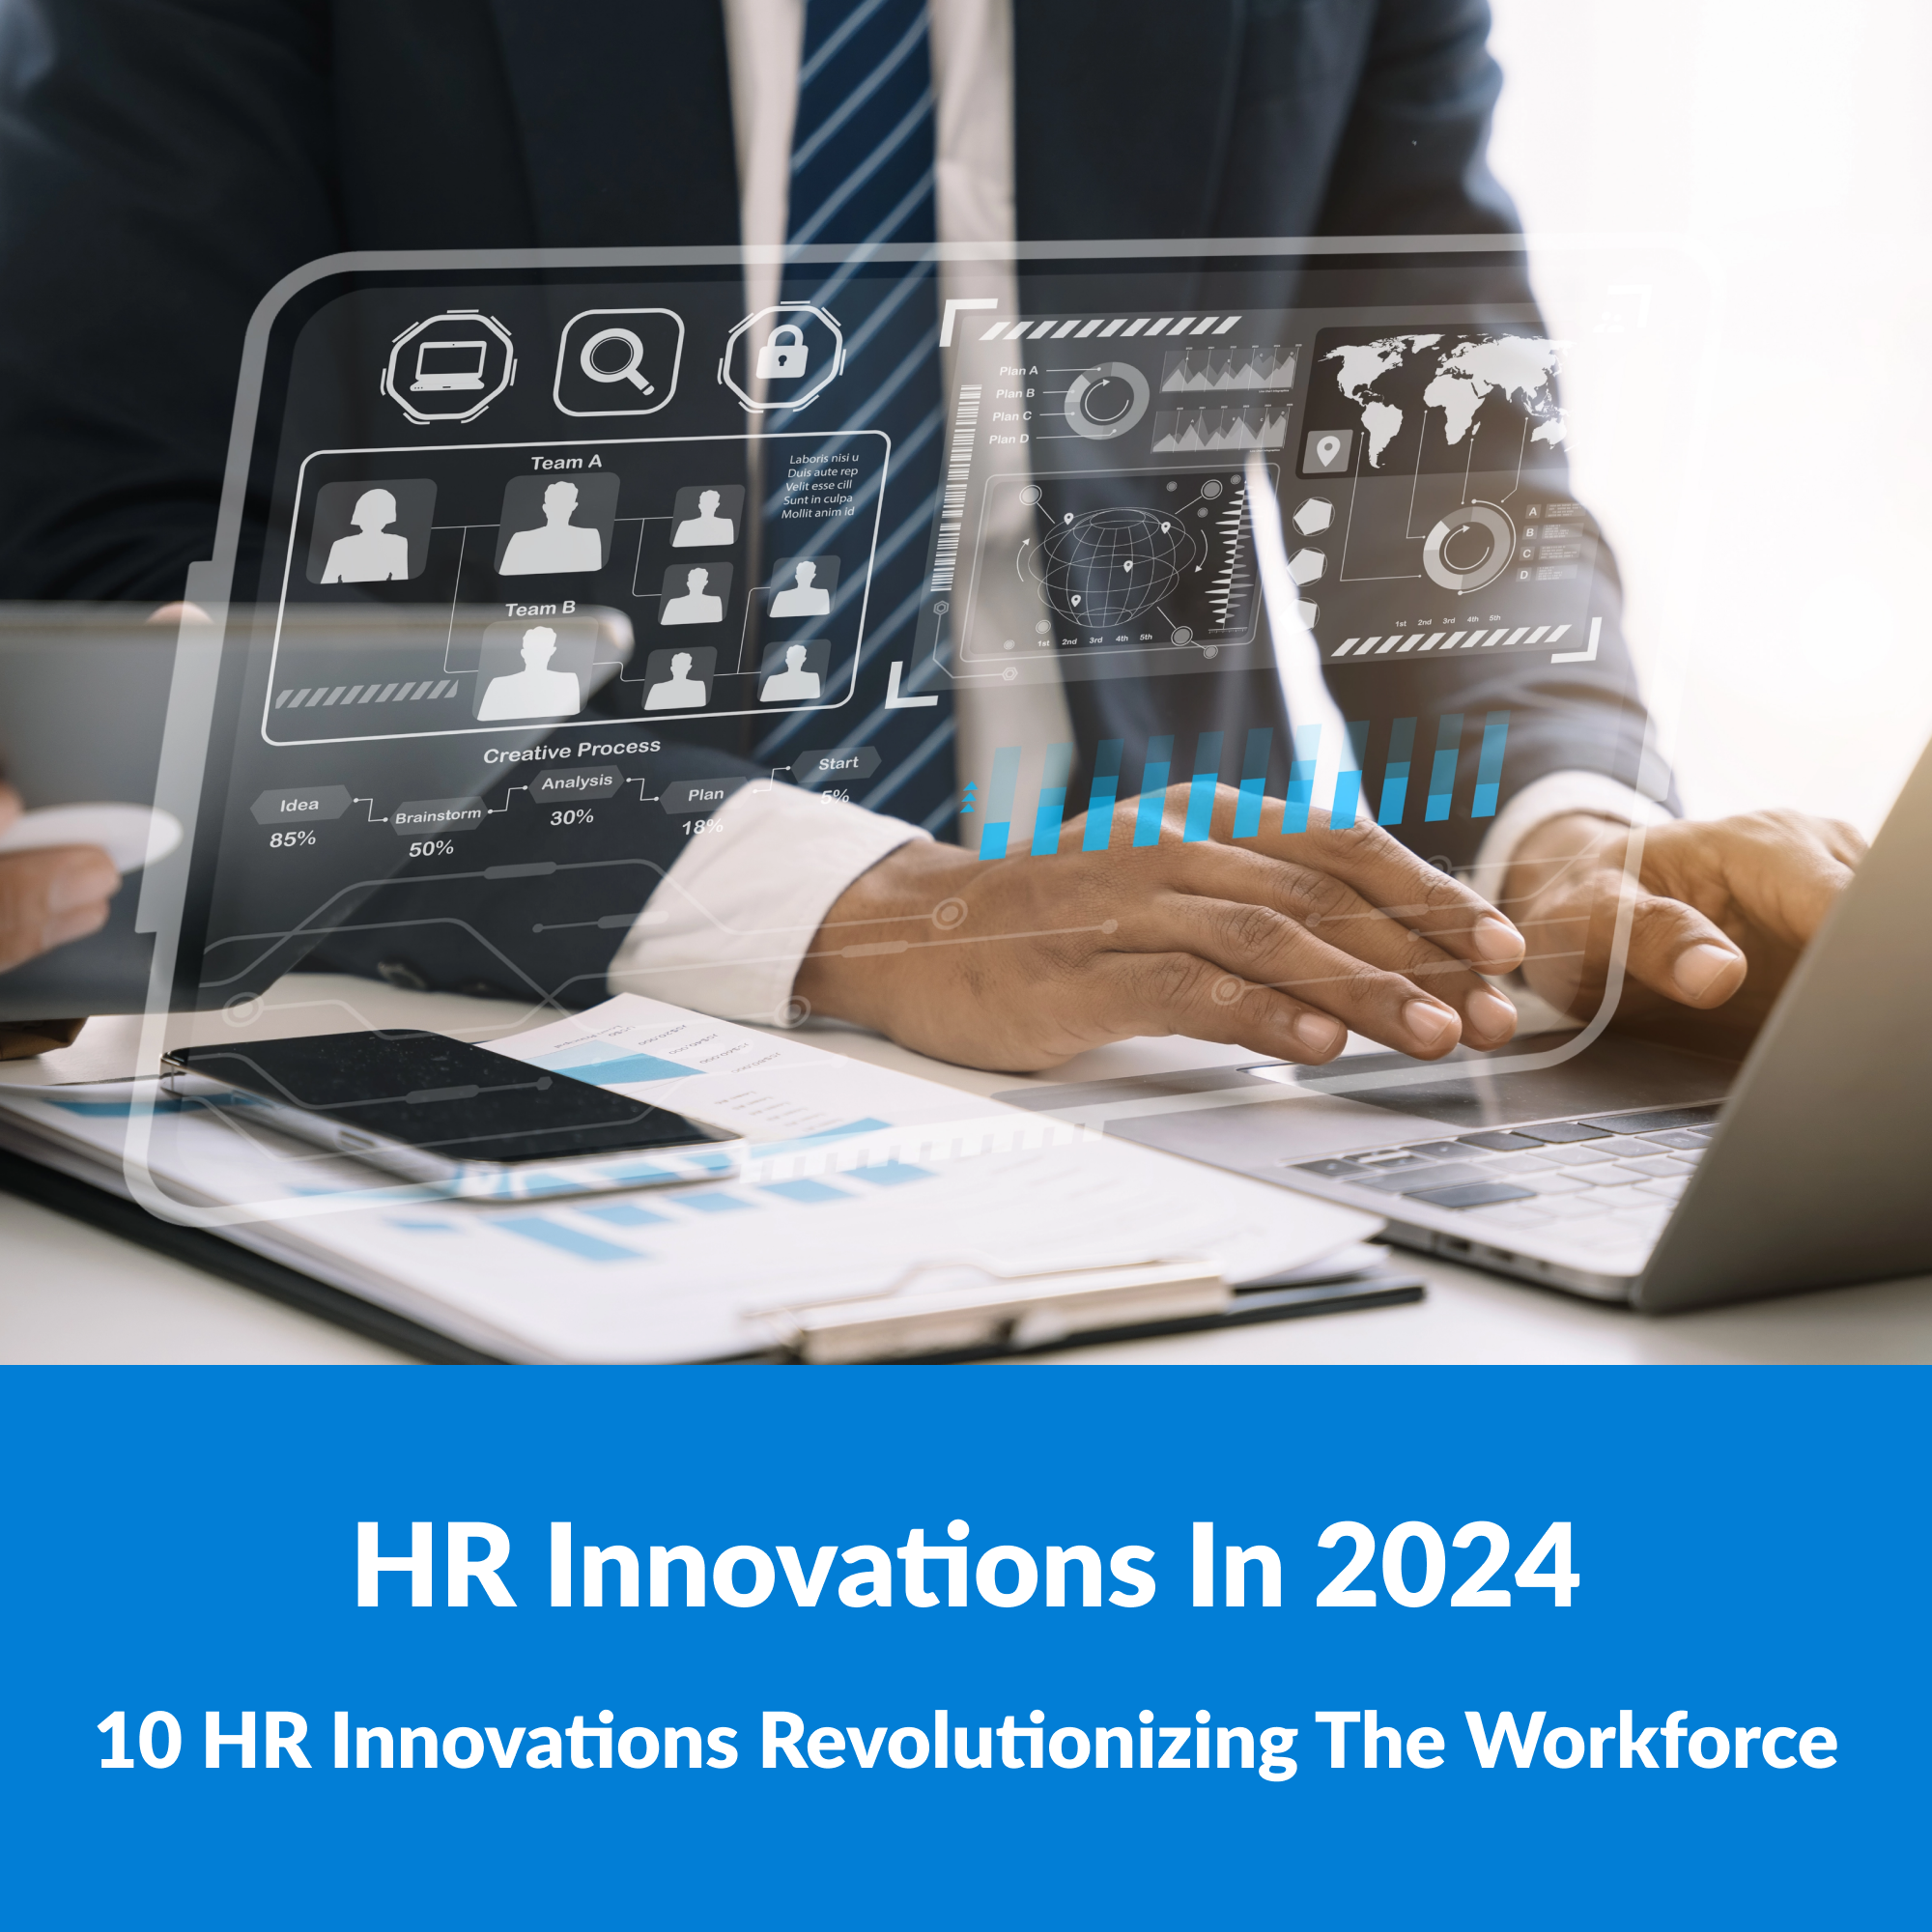 10 HR Innovations Revolutionizing the Workforce in 2024